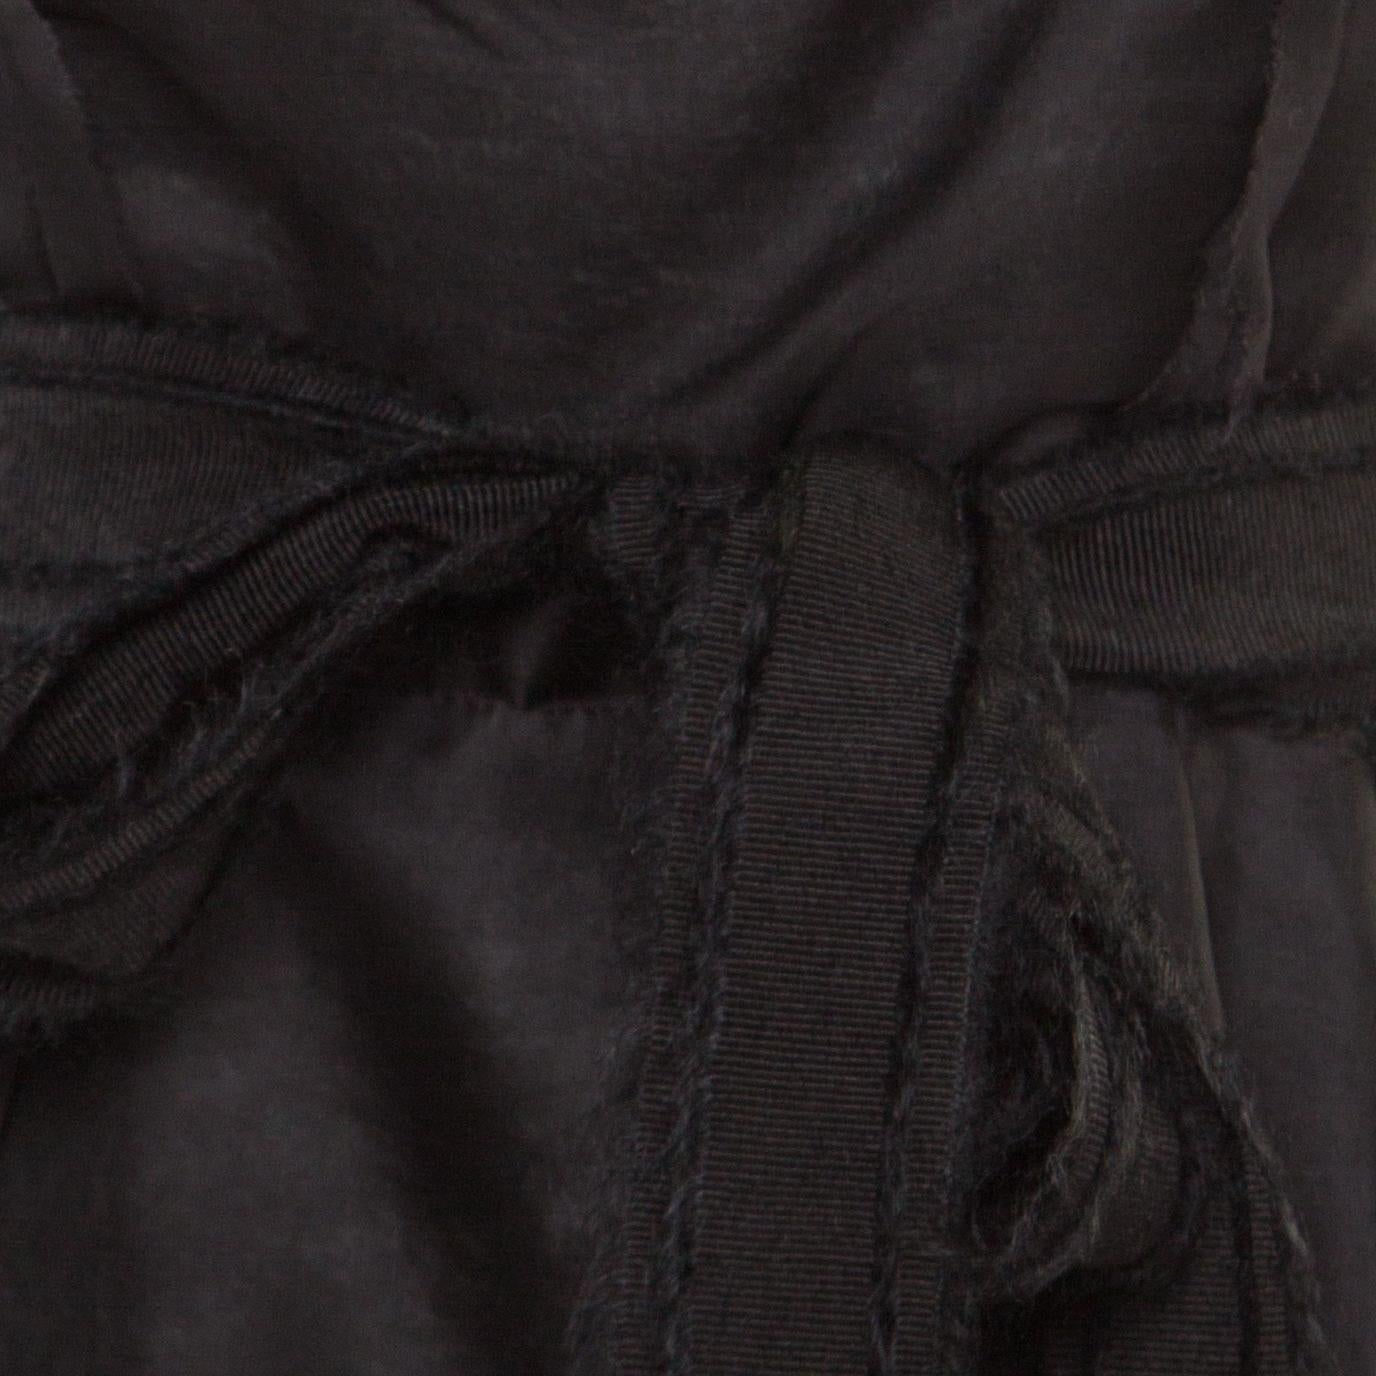 Lanvin Black Silk Organza Raw Edge Detail Sheer Yoke Layered Dress S 1